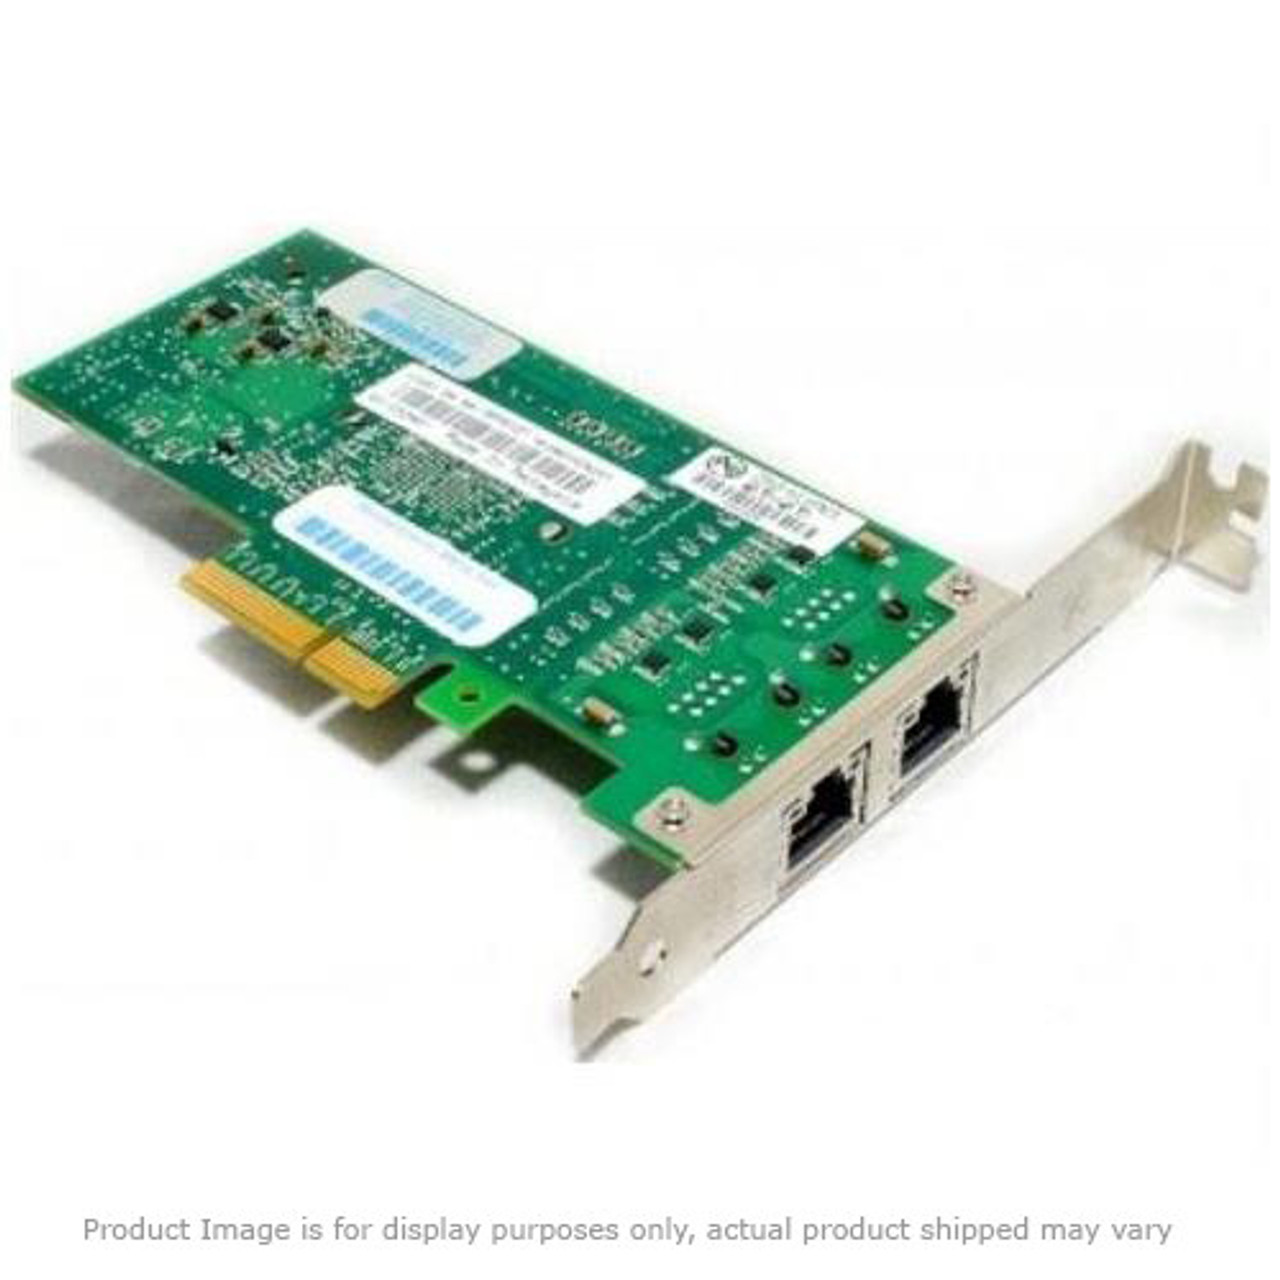 733470-009 Intel PRO/100+ Single-Port RJ-45 100Mbps 10Base-T/100Base-TX Fast Ethernet PCI Server Network Adapter